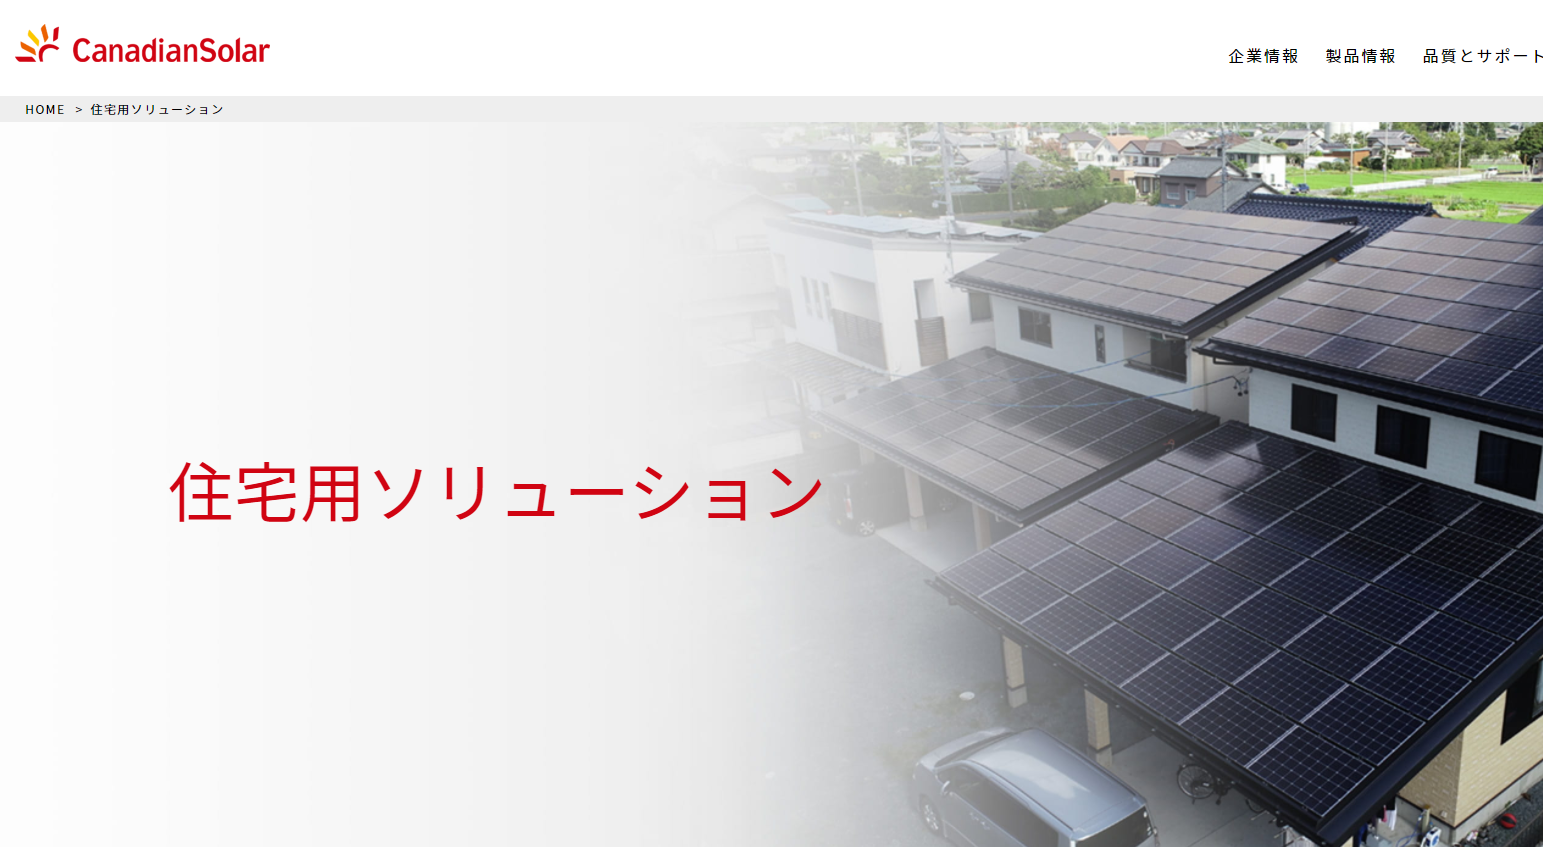 cancadian solar official website